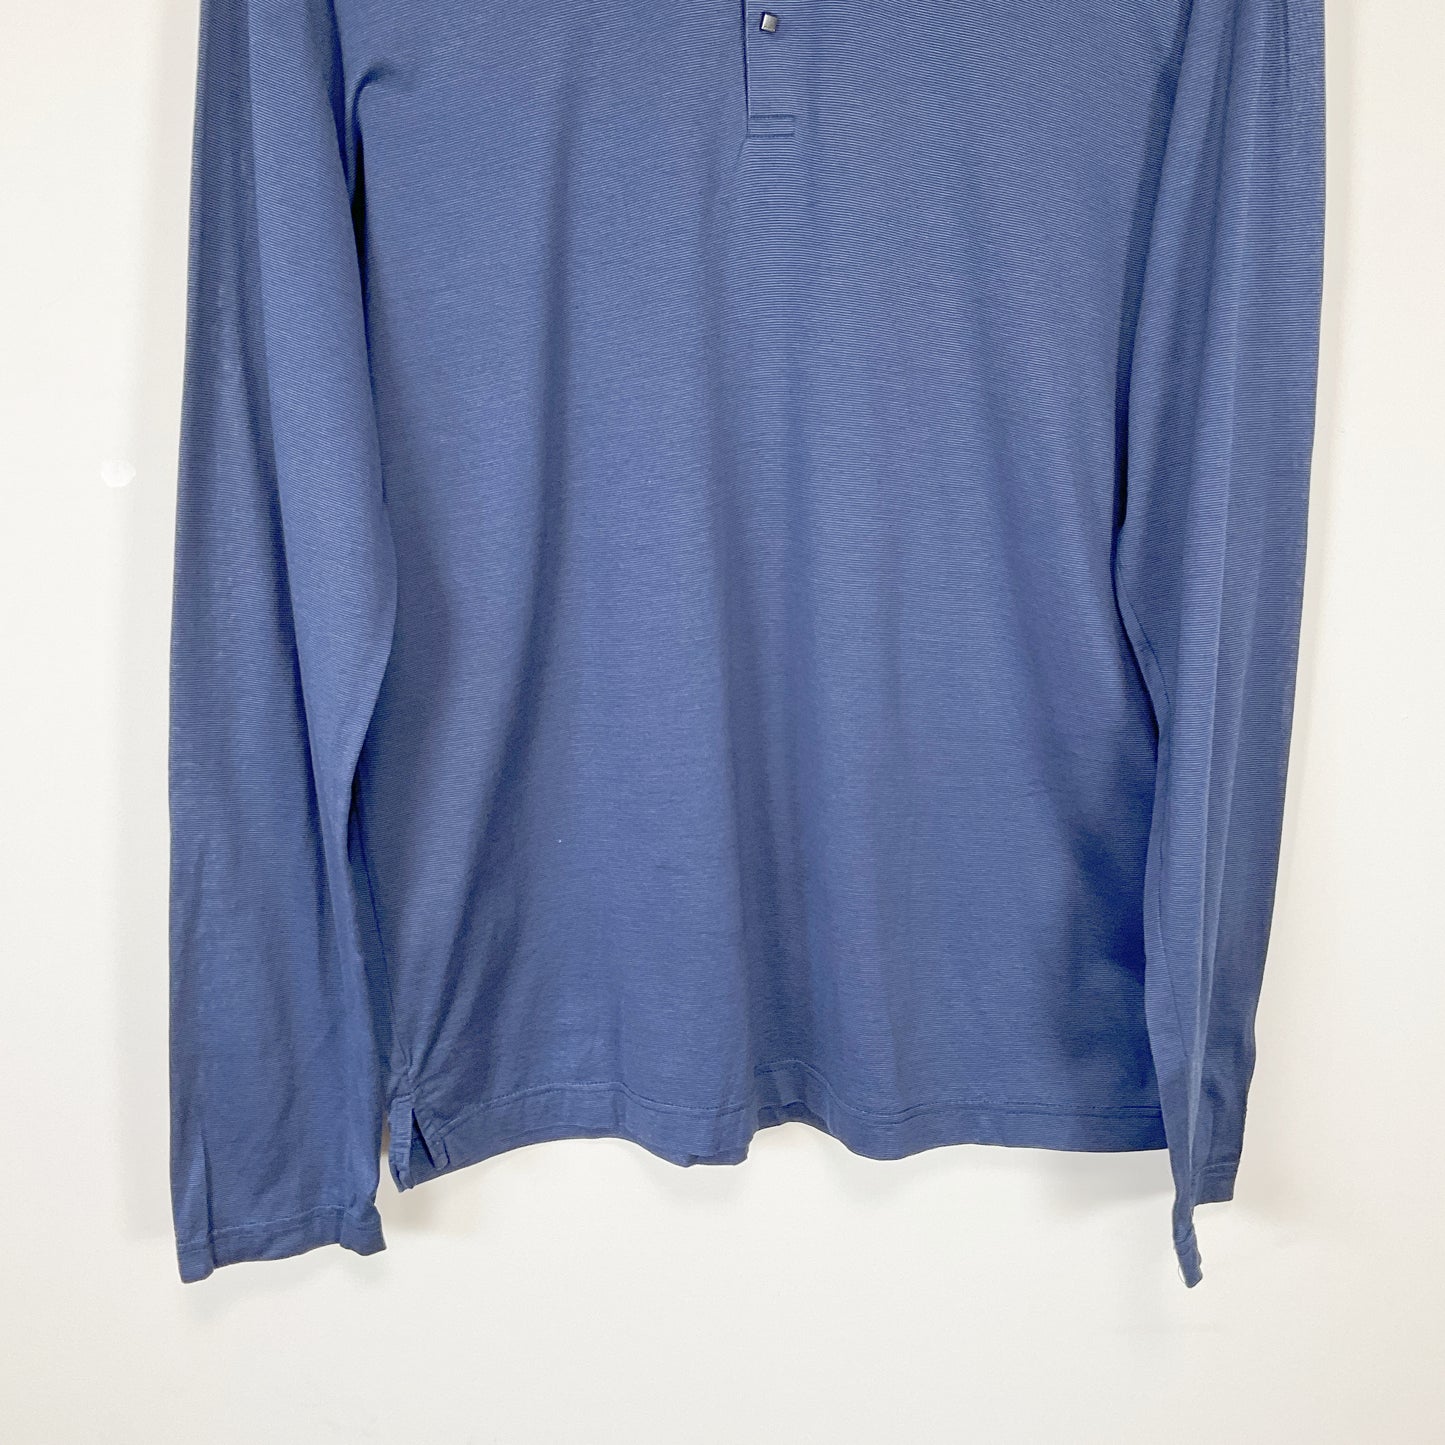 Lagerfeld - Long Sleeve Polo Shirt